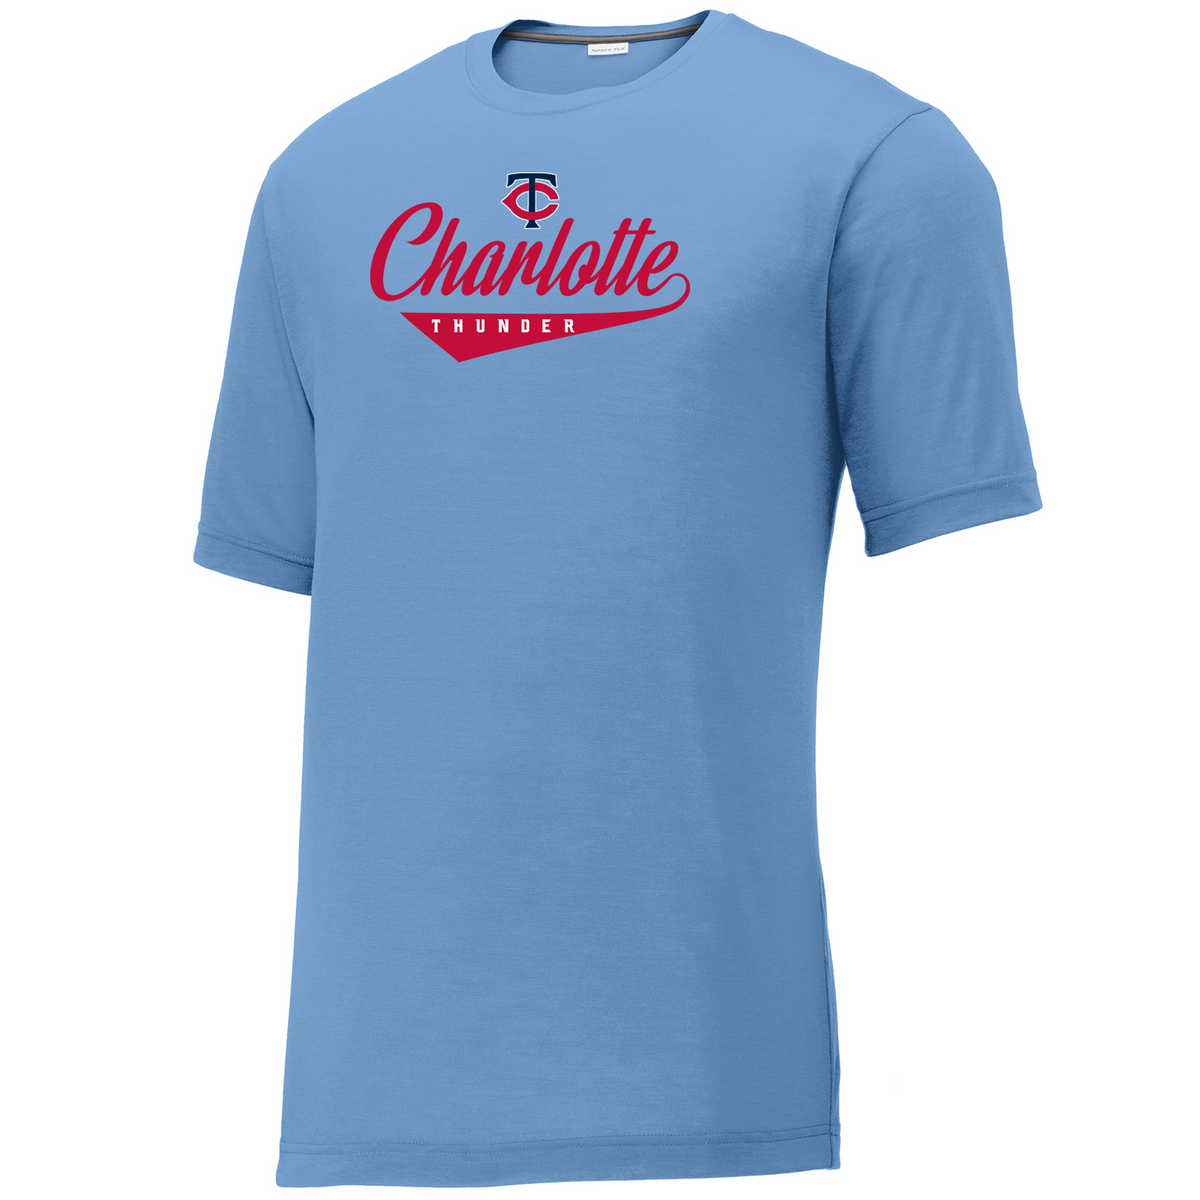 Charlotte Thunder Baseball CottonTouch Performance T-Shirt